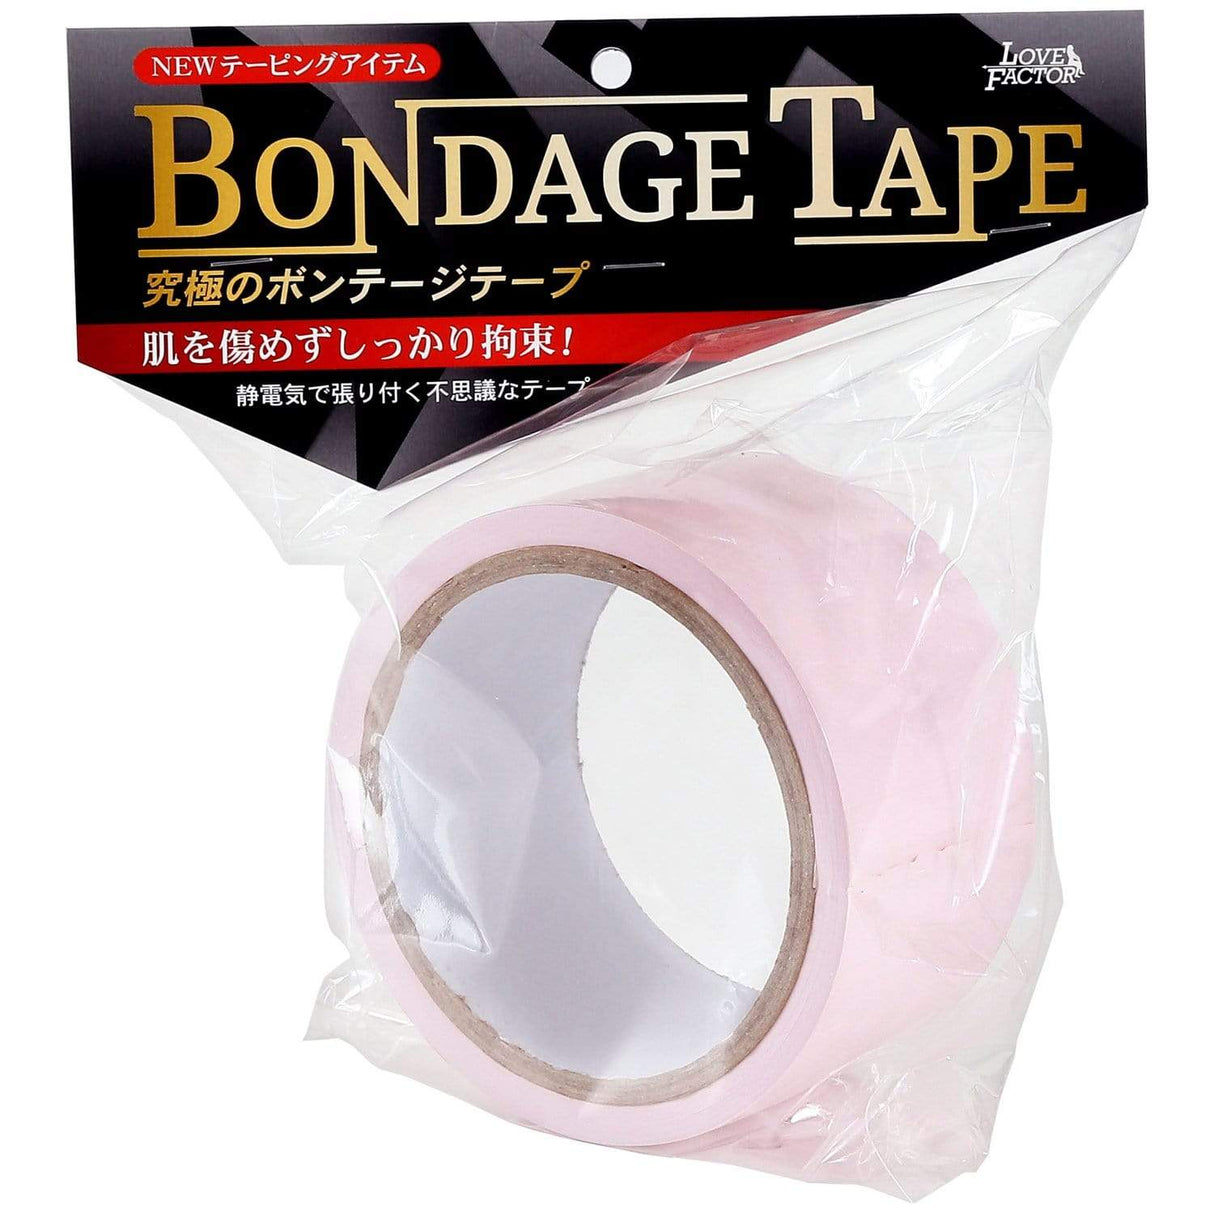 Love Factor - Peach Bondage Tape 20m (Pink) LF1011 CherryAffairs